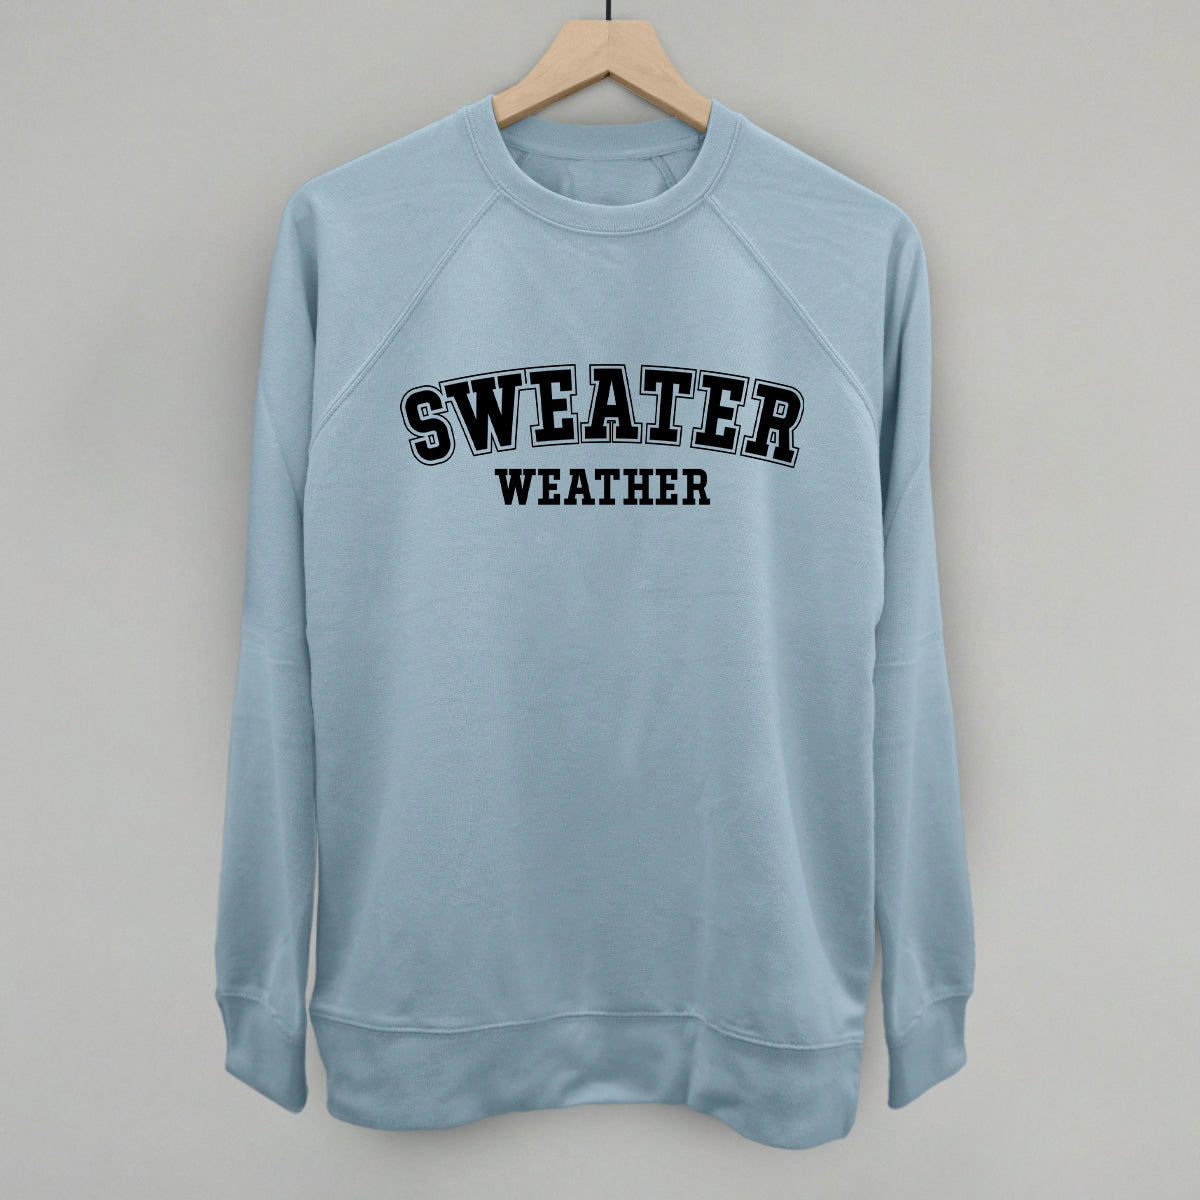 Sweater Weather Collegiate